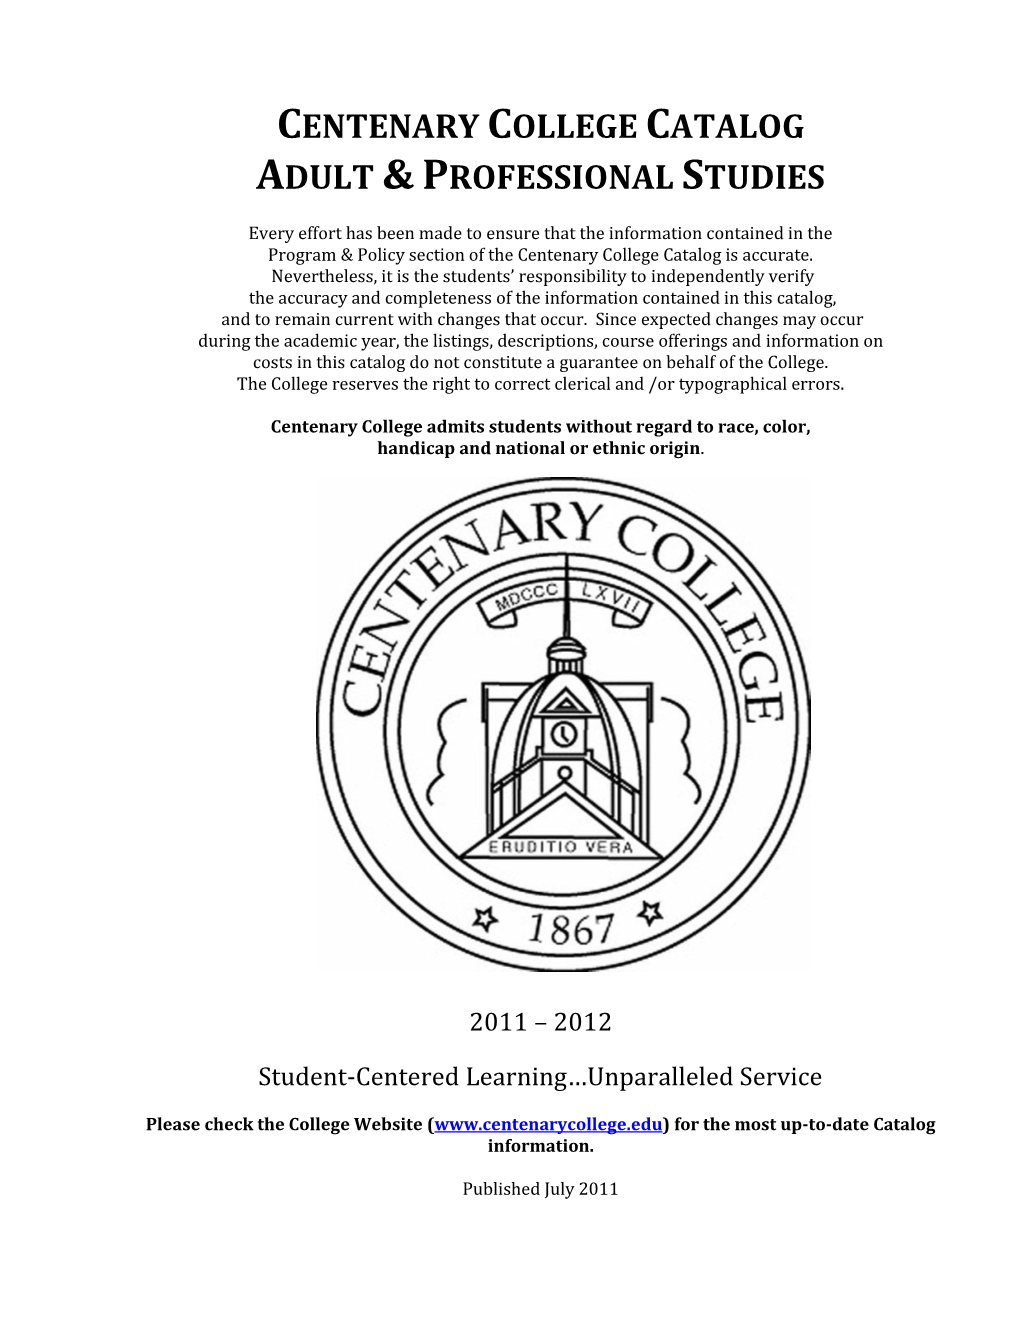 Centenary College Catalog Adult &Professional Studies